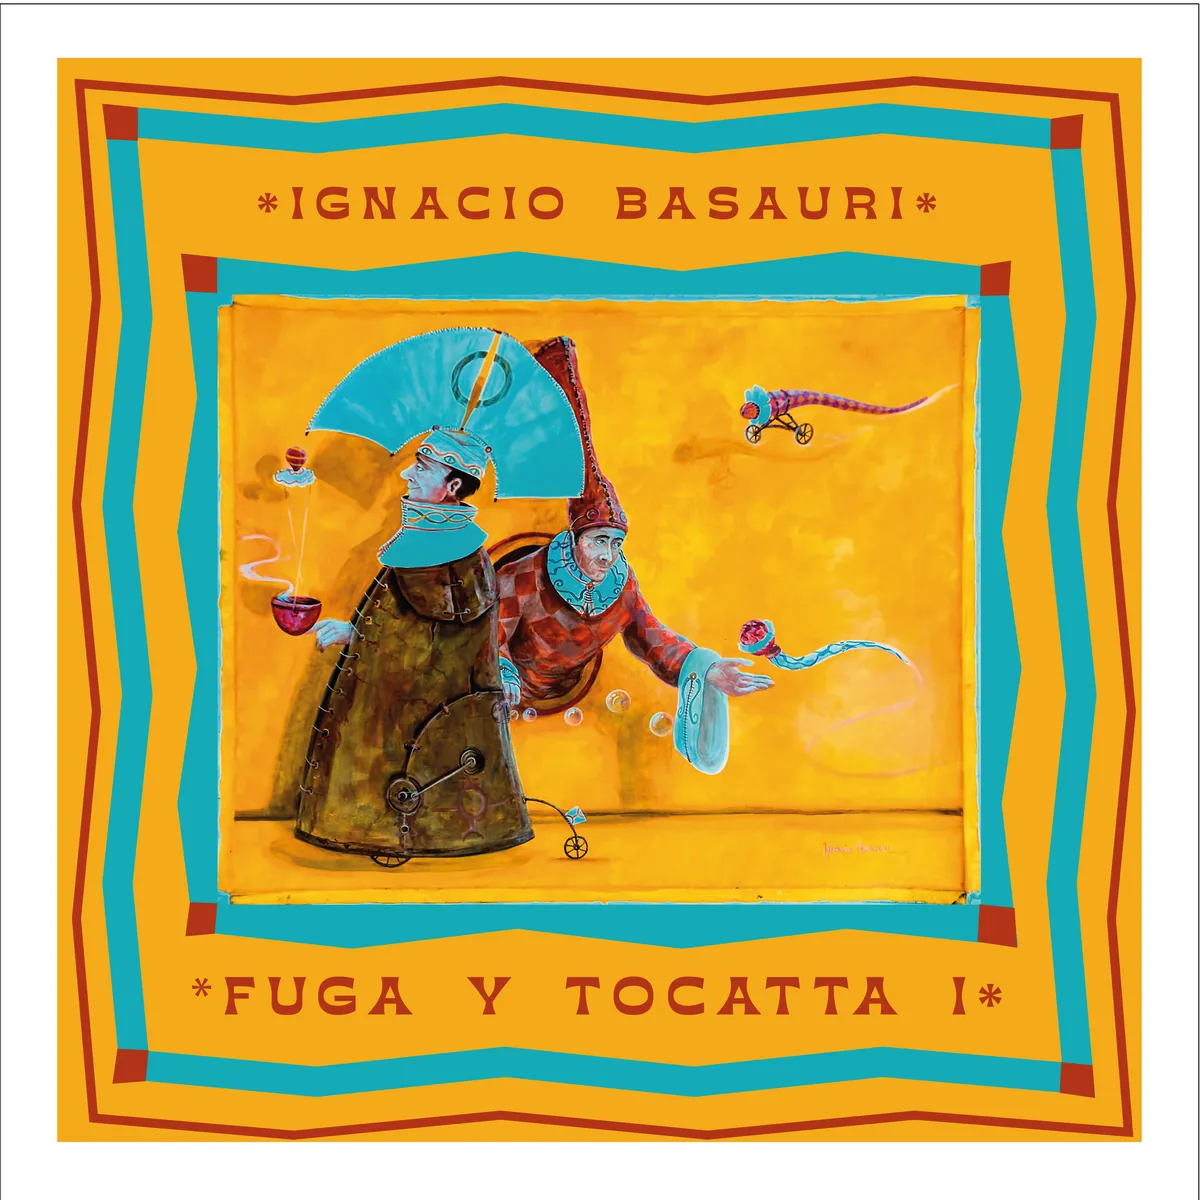 Pañuelo Fuga y Tocatta I by Ignacio Basauri - Chile